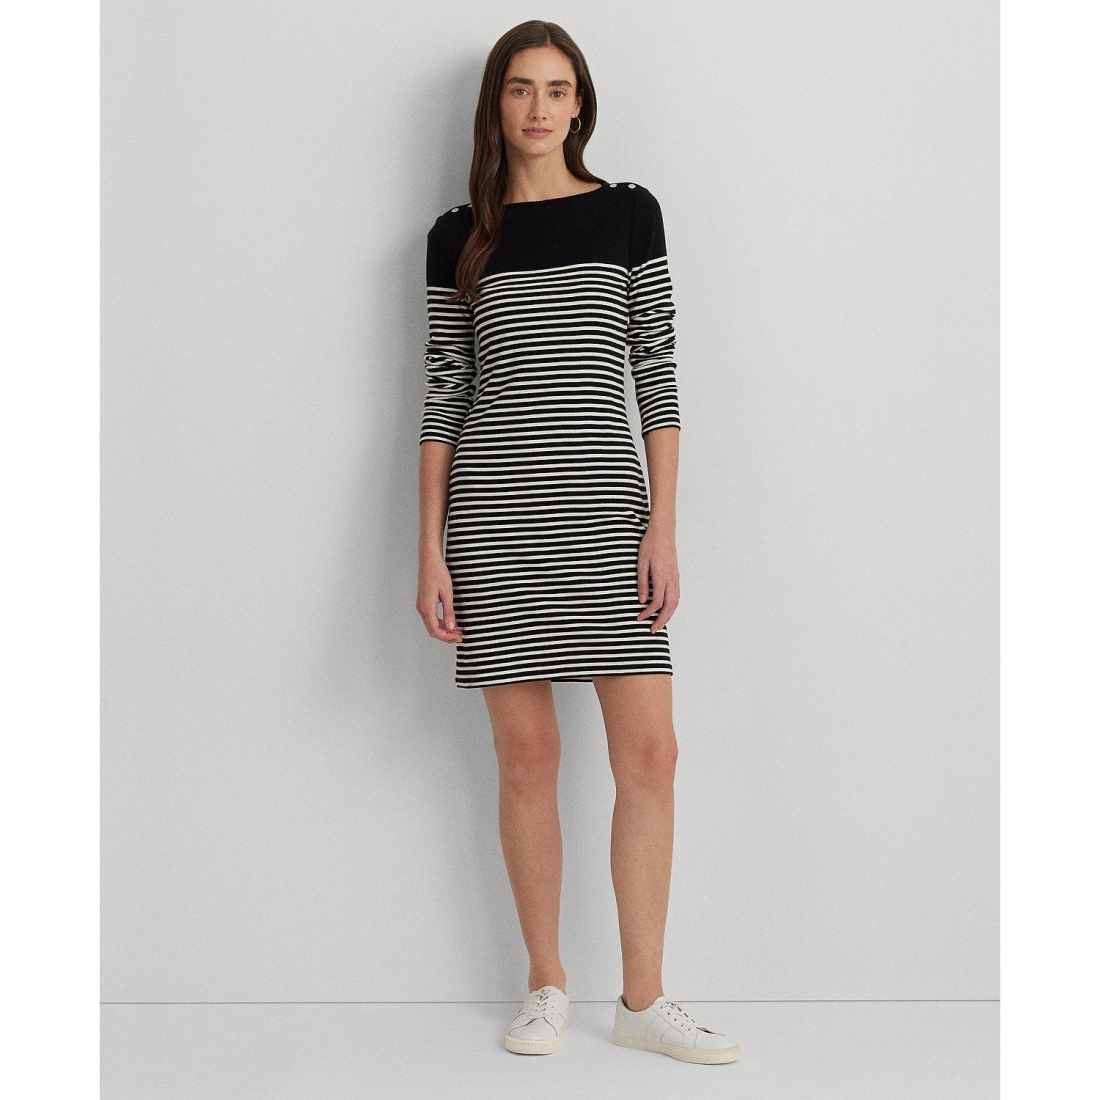 Women's 'Striped' 3/4 Sleeved Dress